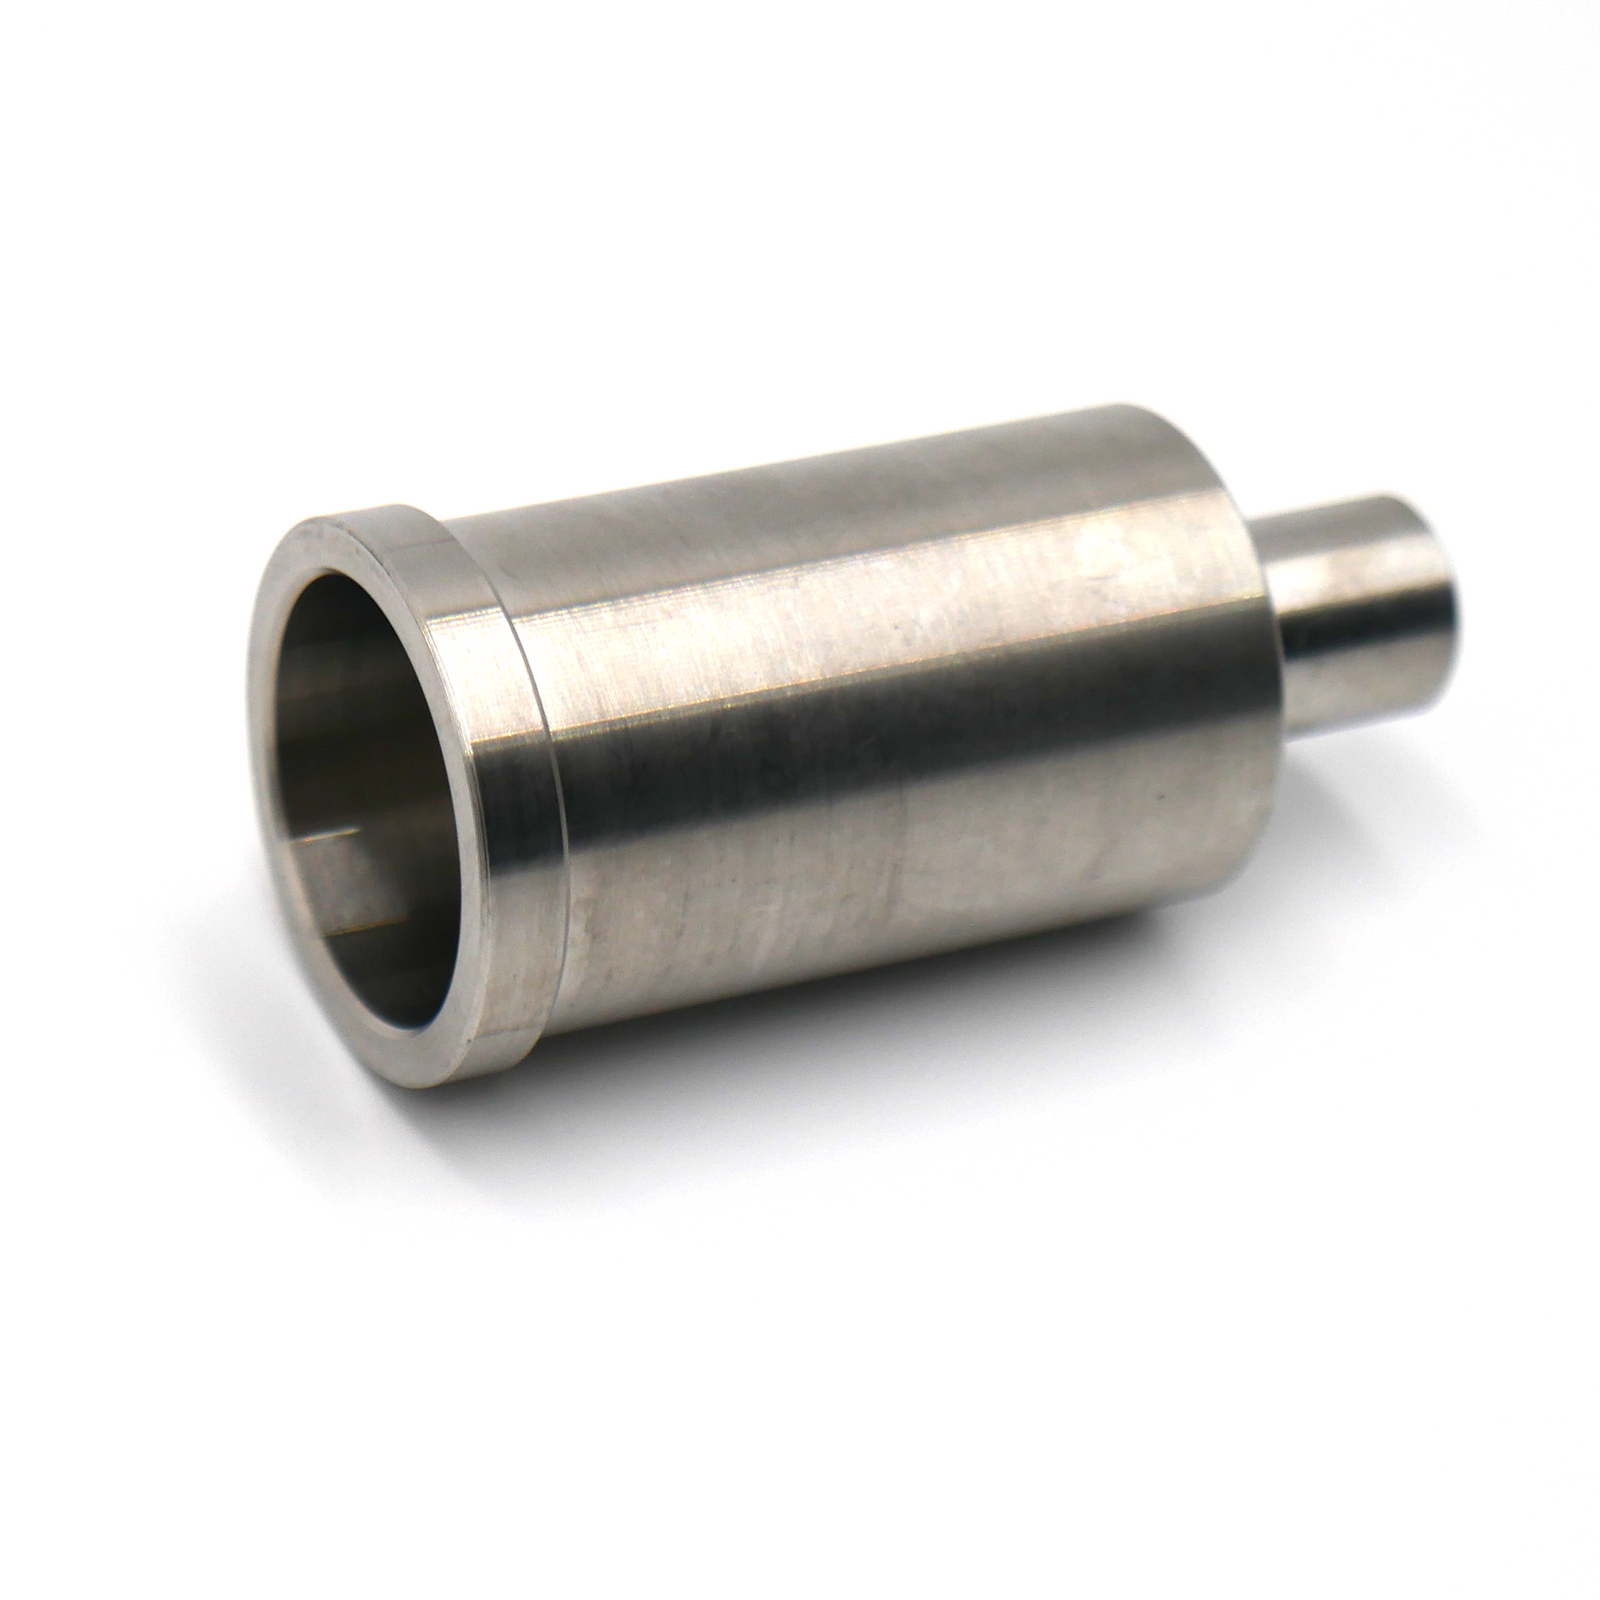 10mm dispensing nozzle filling tip